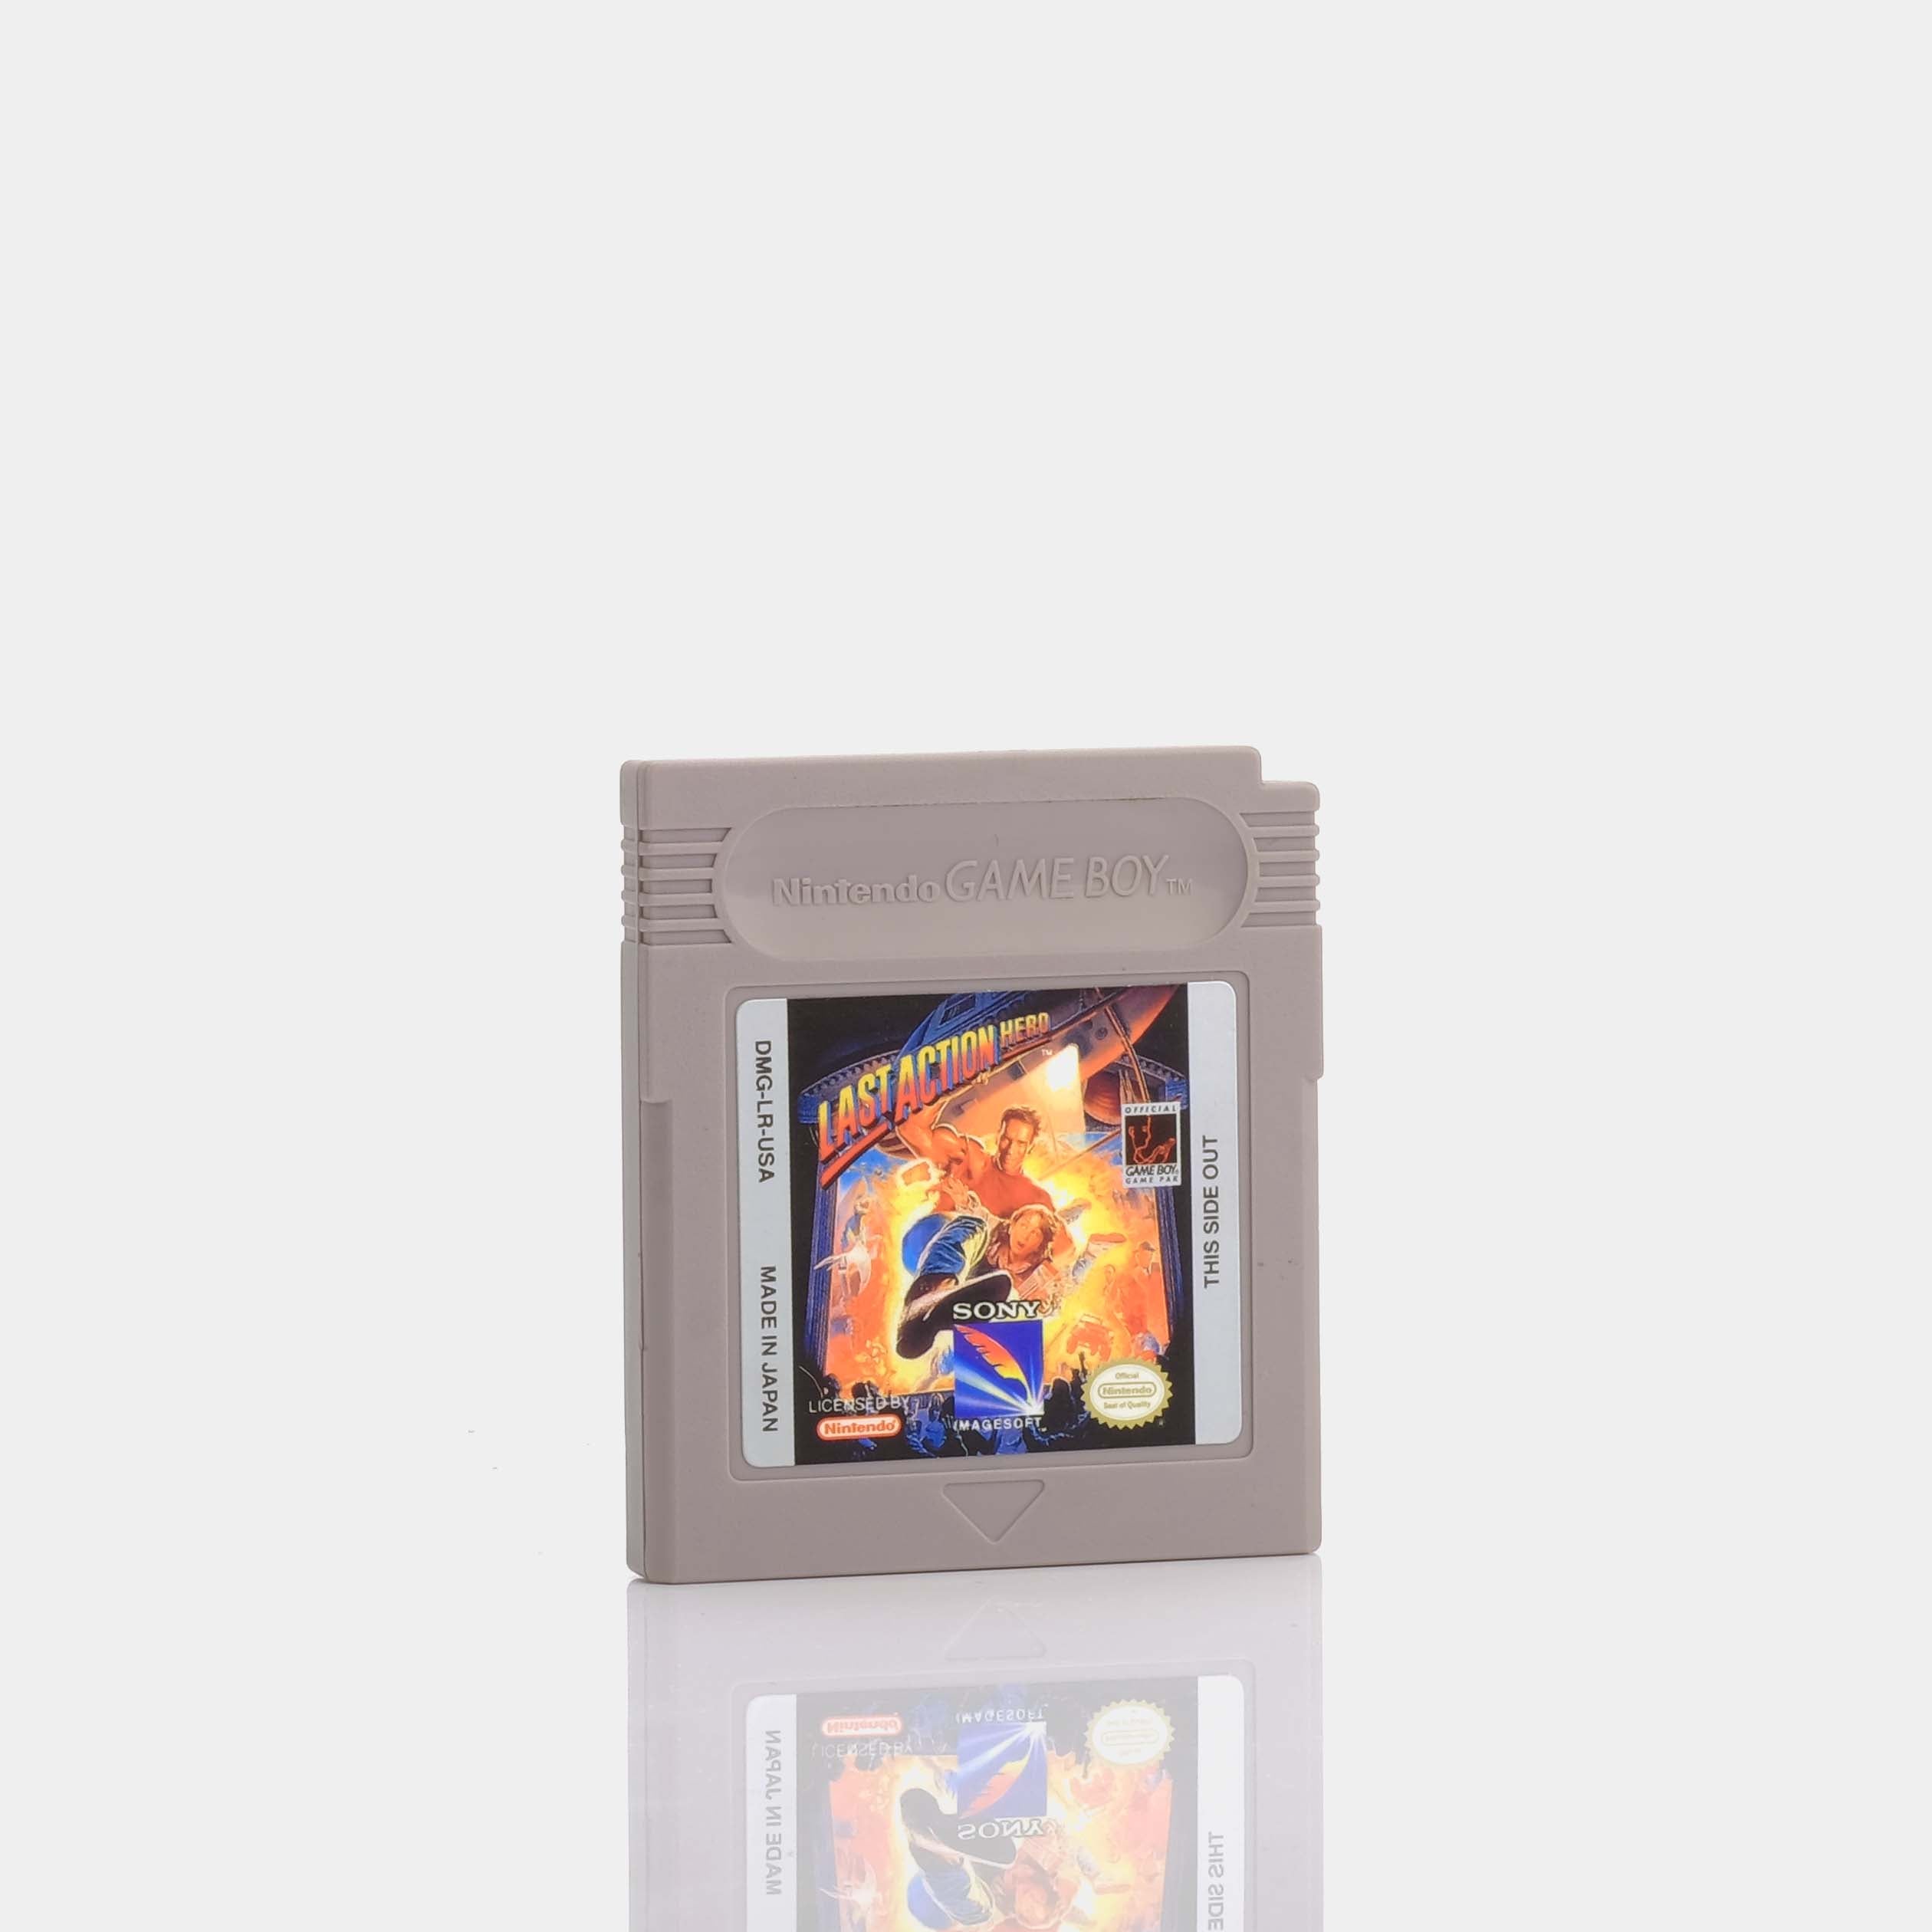 Last Action Hero (1993) Game Boy Game